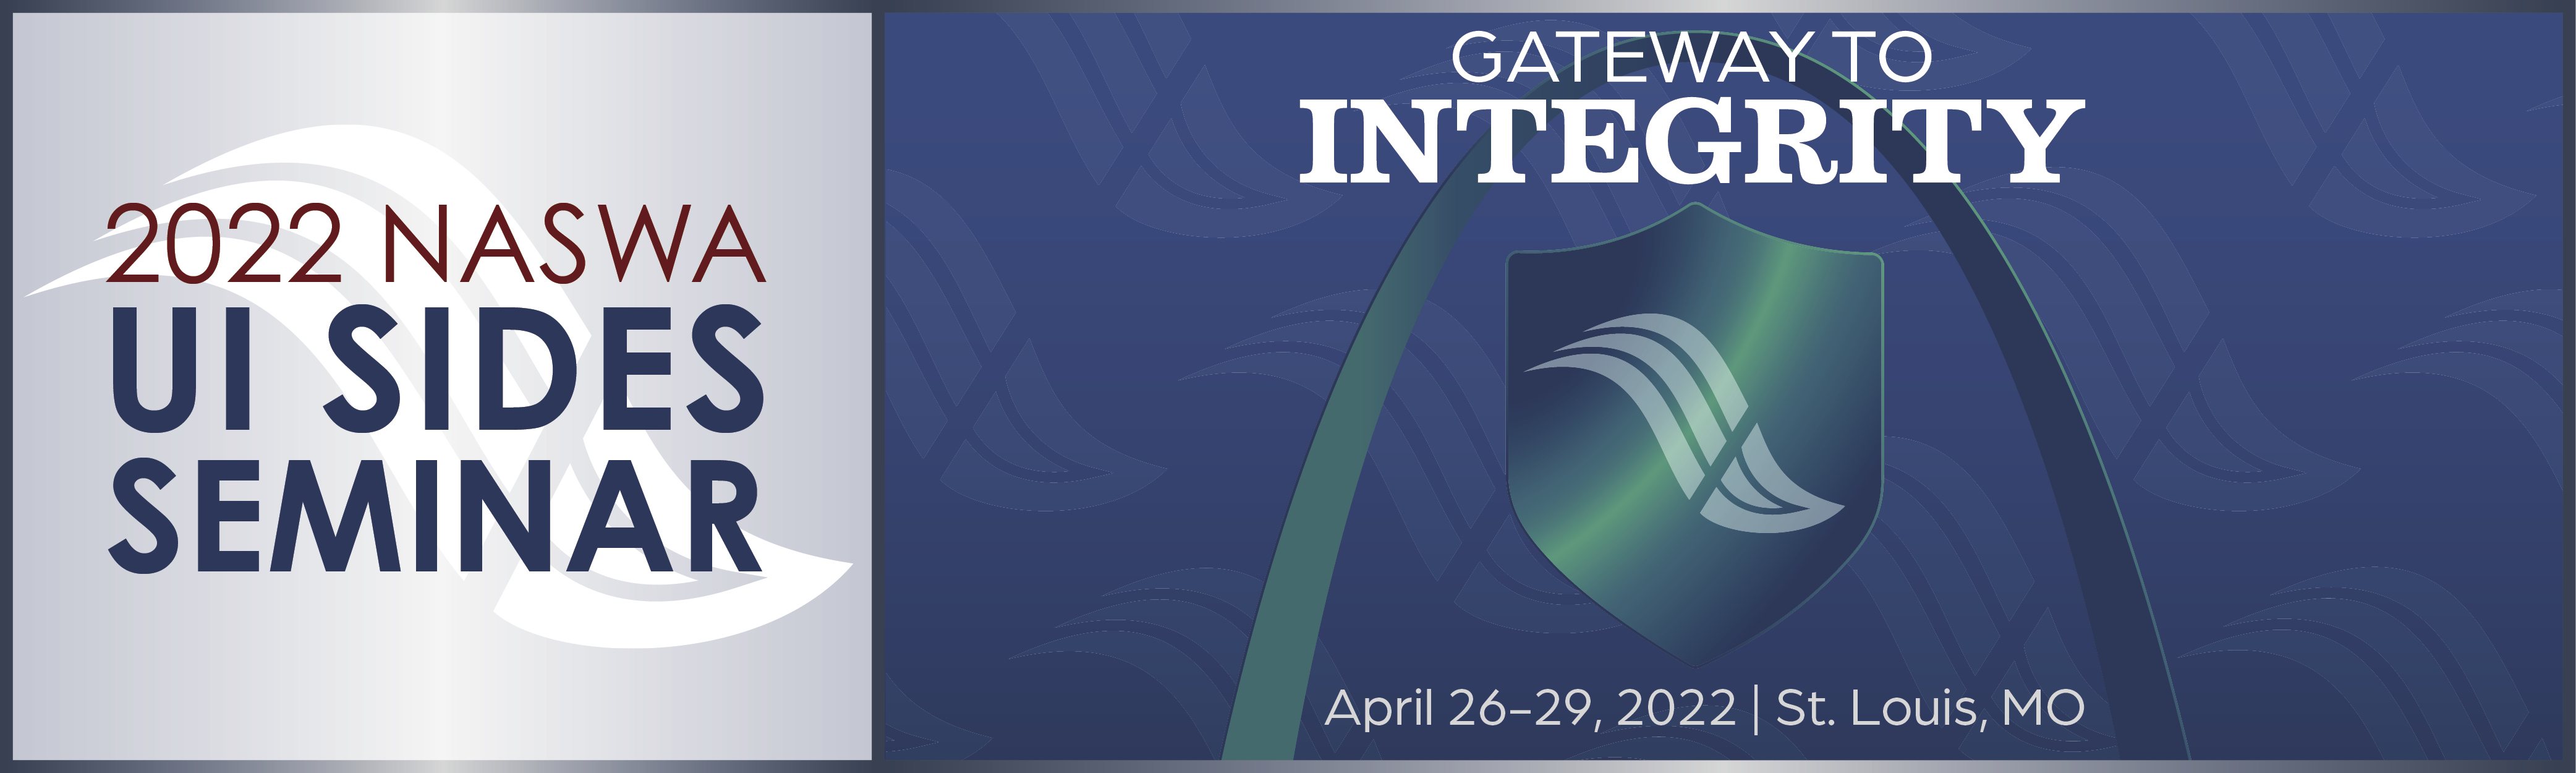 2022 NASWA UI SIDES Seminar. Gateway to Integrity. April 26-29, 2022. St. Louis, MO